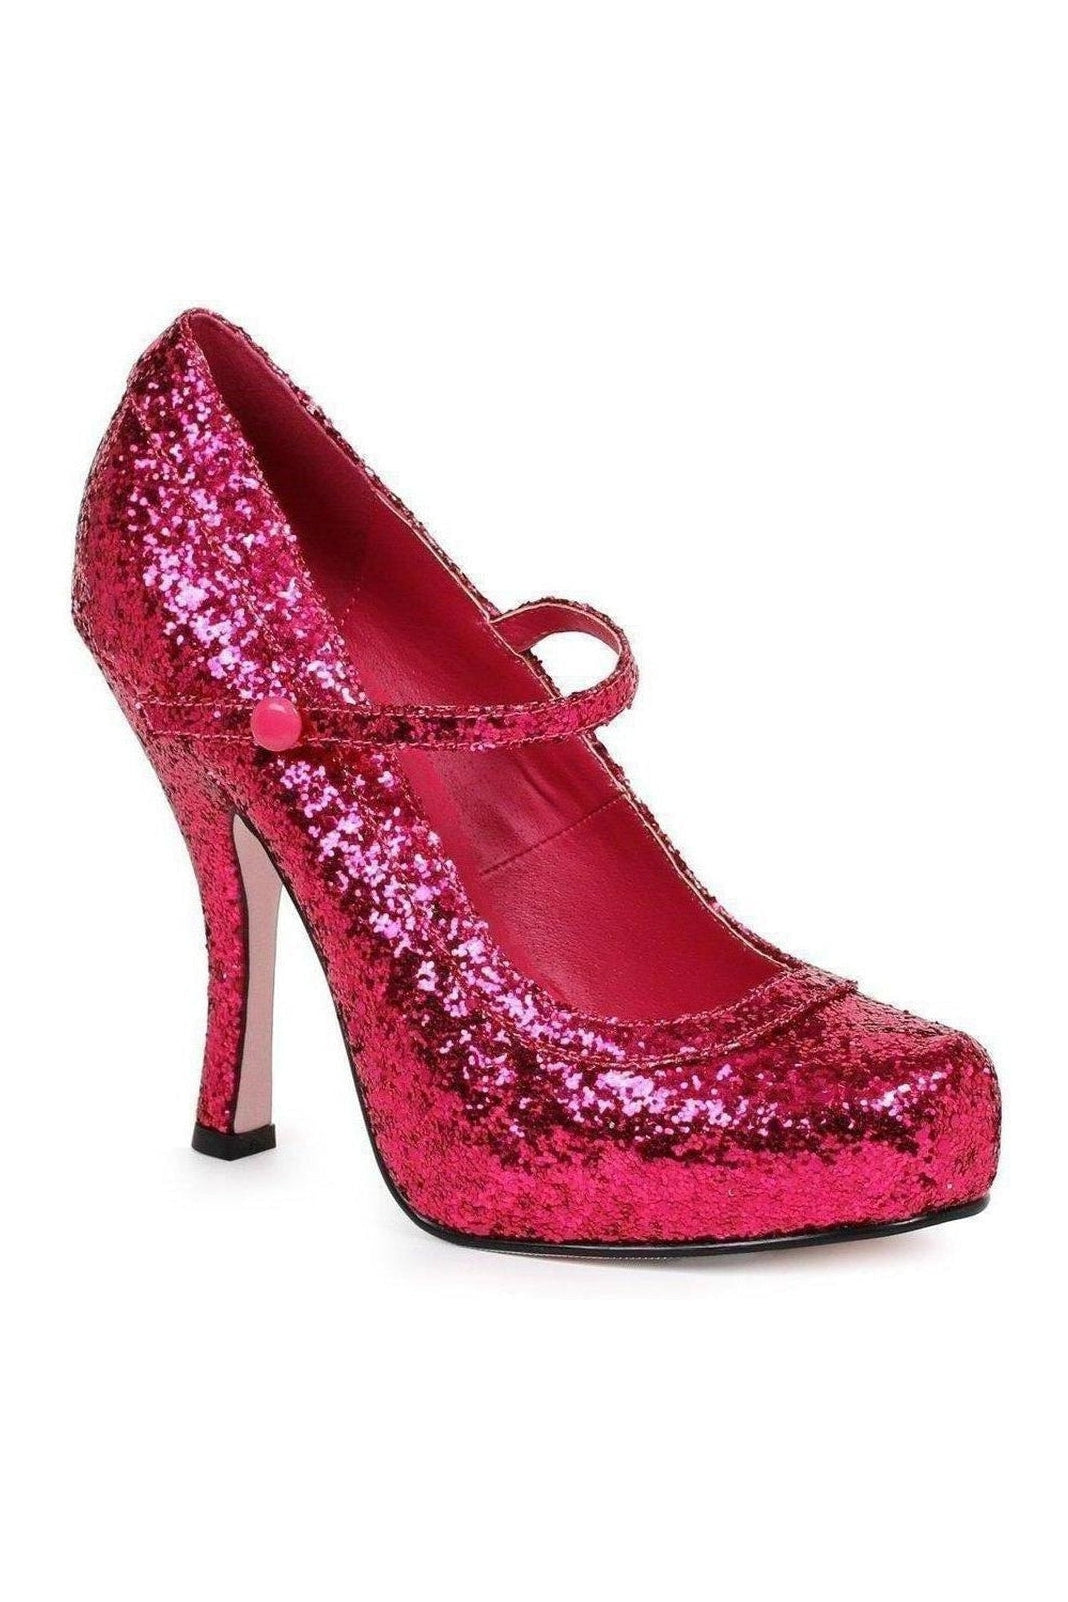 423-CANDY Costume Pump | Fuchsia Glitter-Ellie Shoes-SEXYSHOES.COM